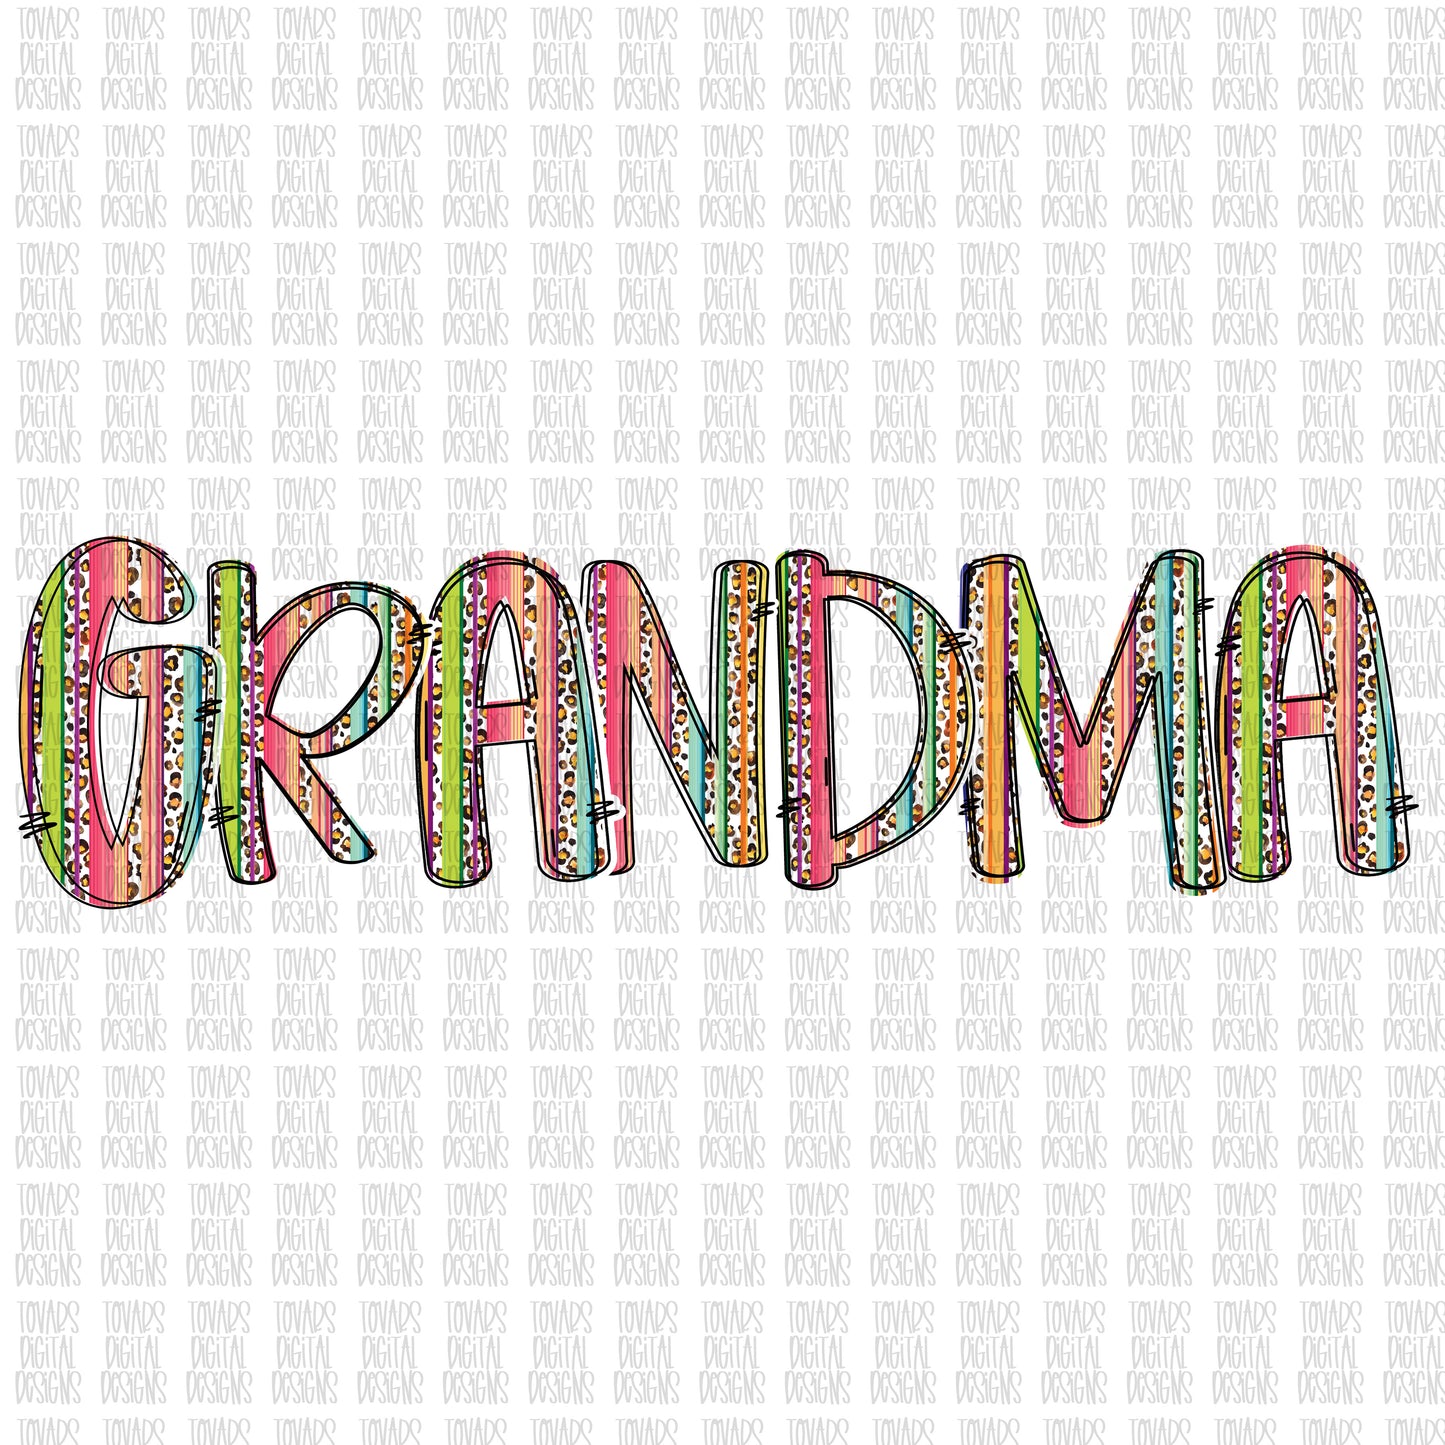 Grandma Leopard serape print Sublimation Download, Grandma leopard serape PNG File Instant Download, Grandma leopard serape Sublimation